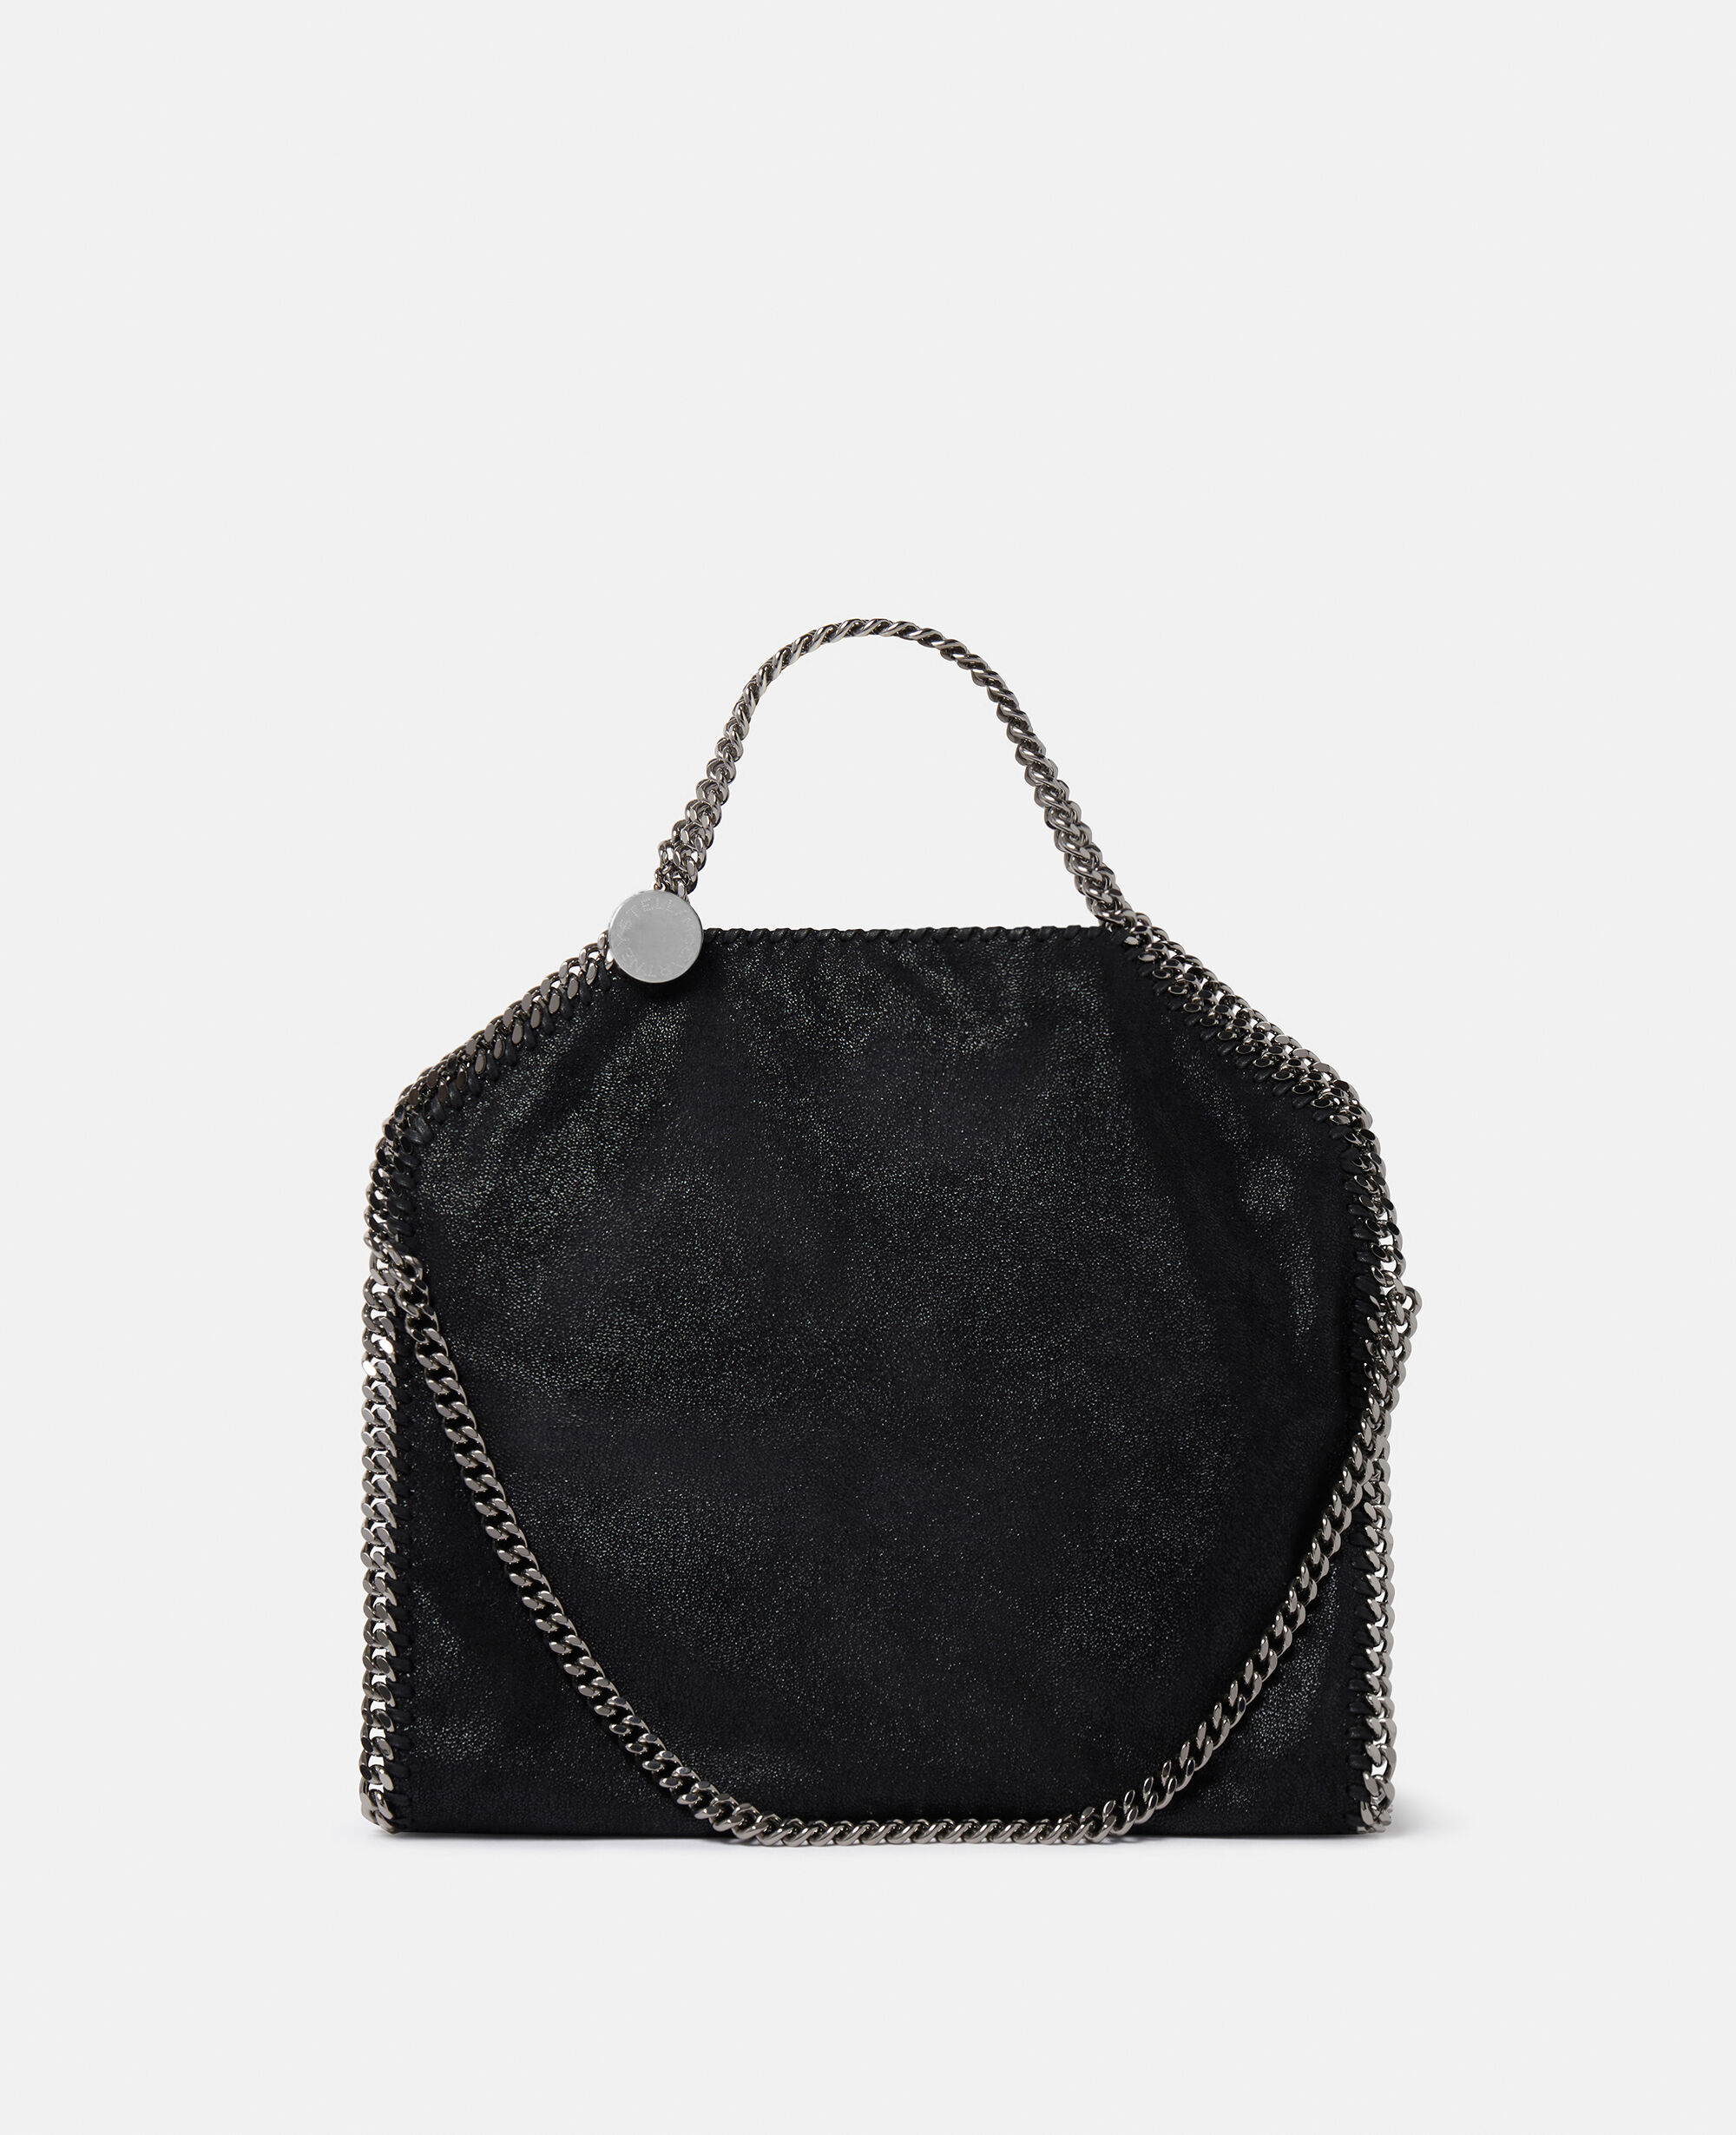 Stella Mccartney Handbags. In Black | ModeSens